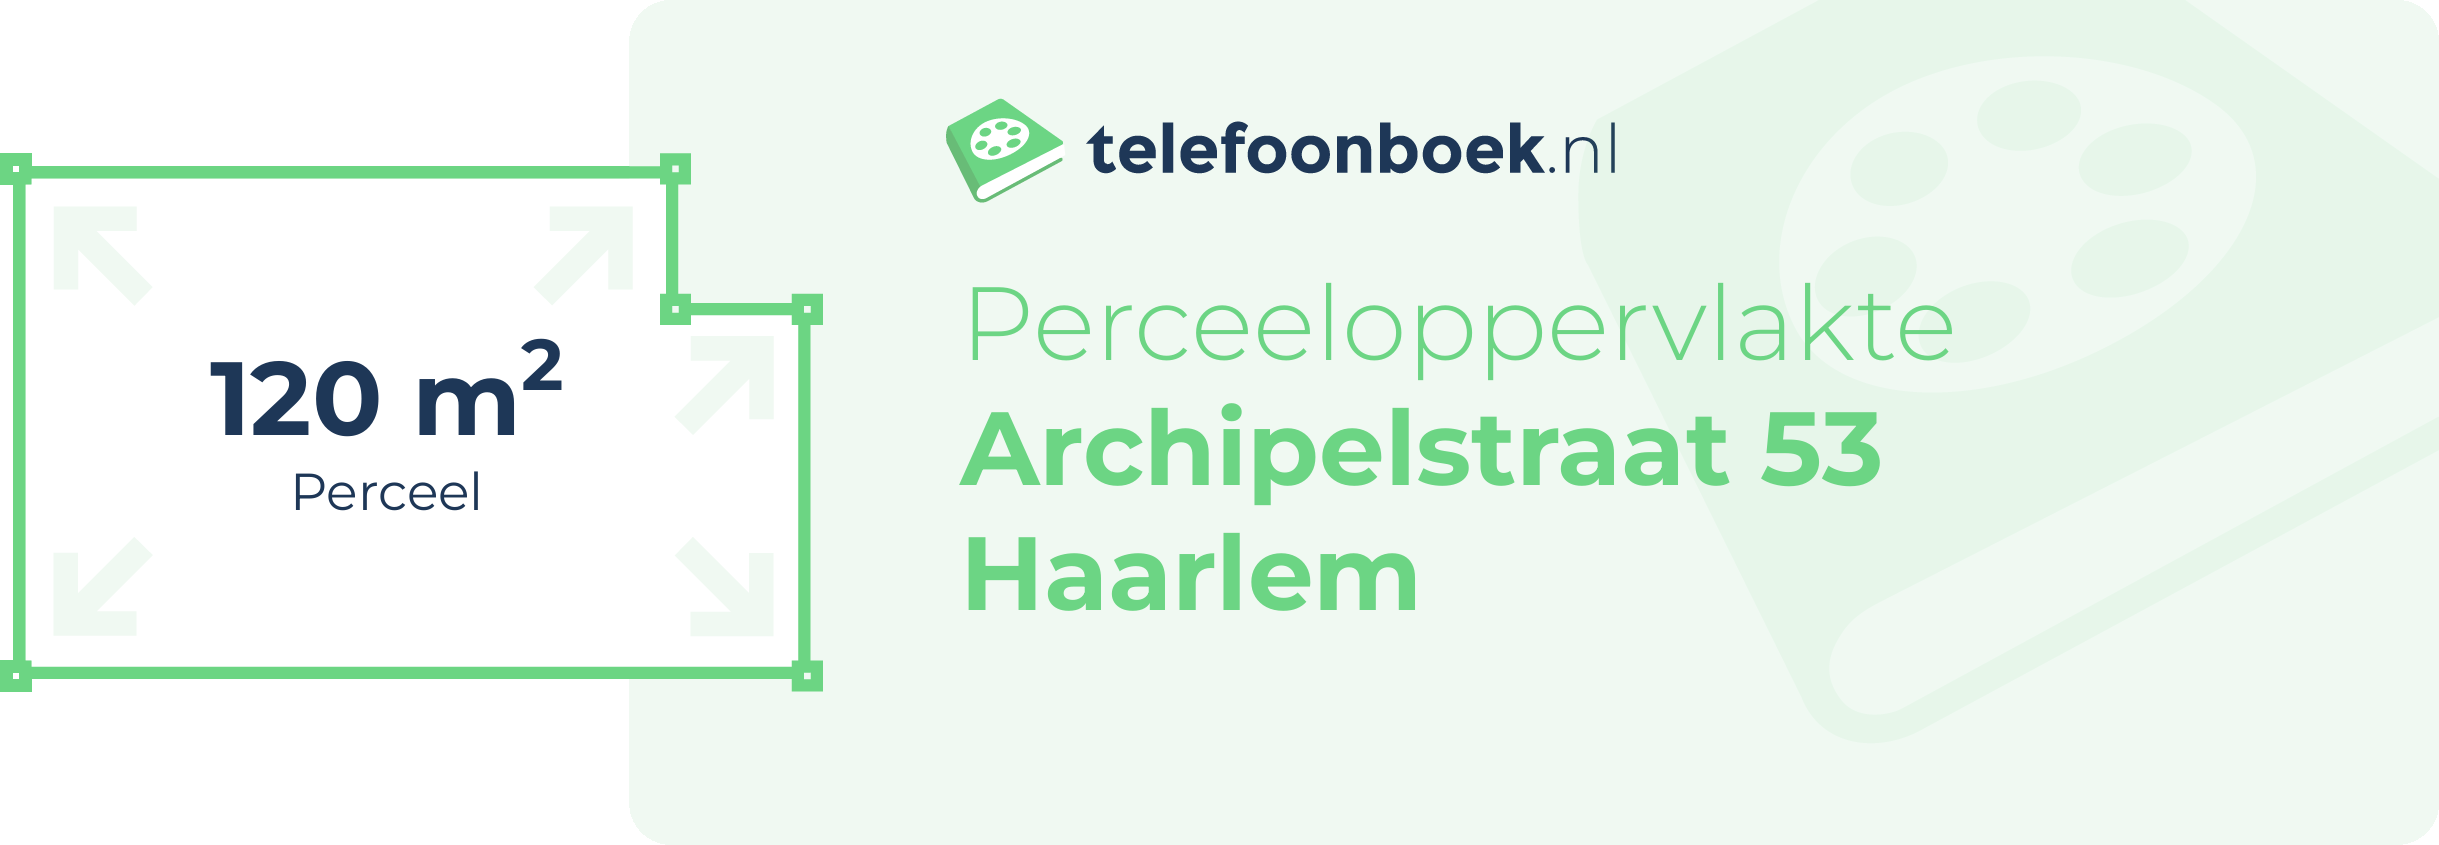 Perceeloppervlakte Archipelstraat 53 Haarlem